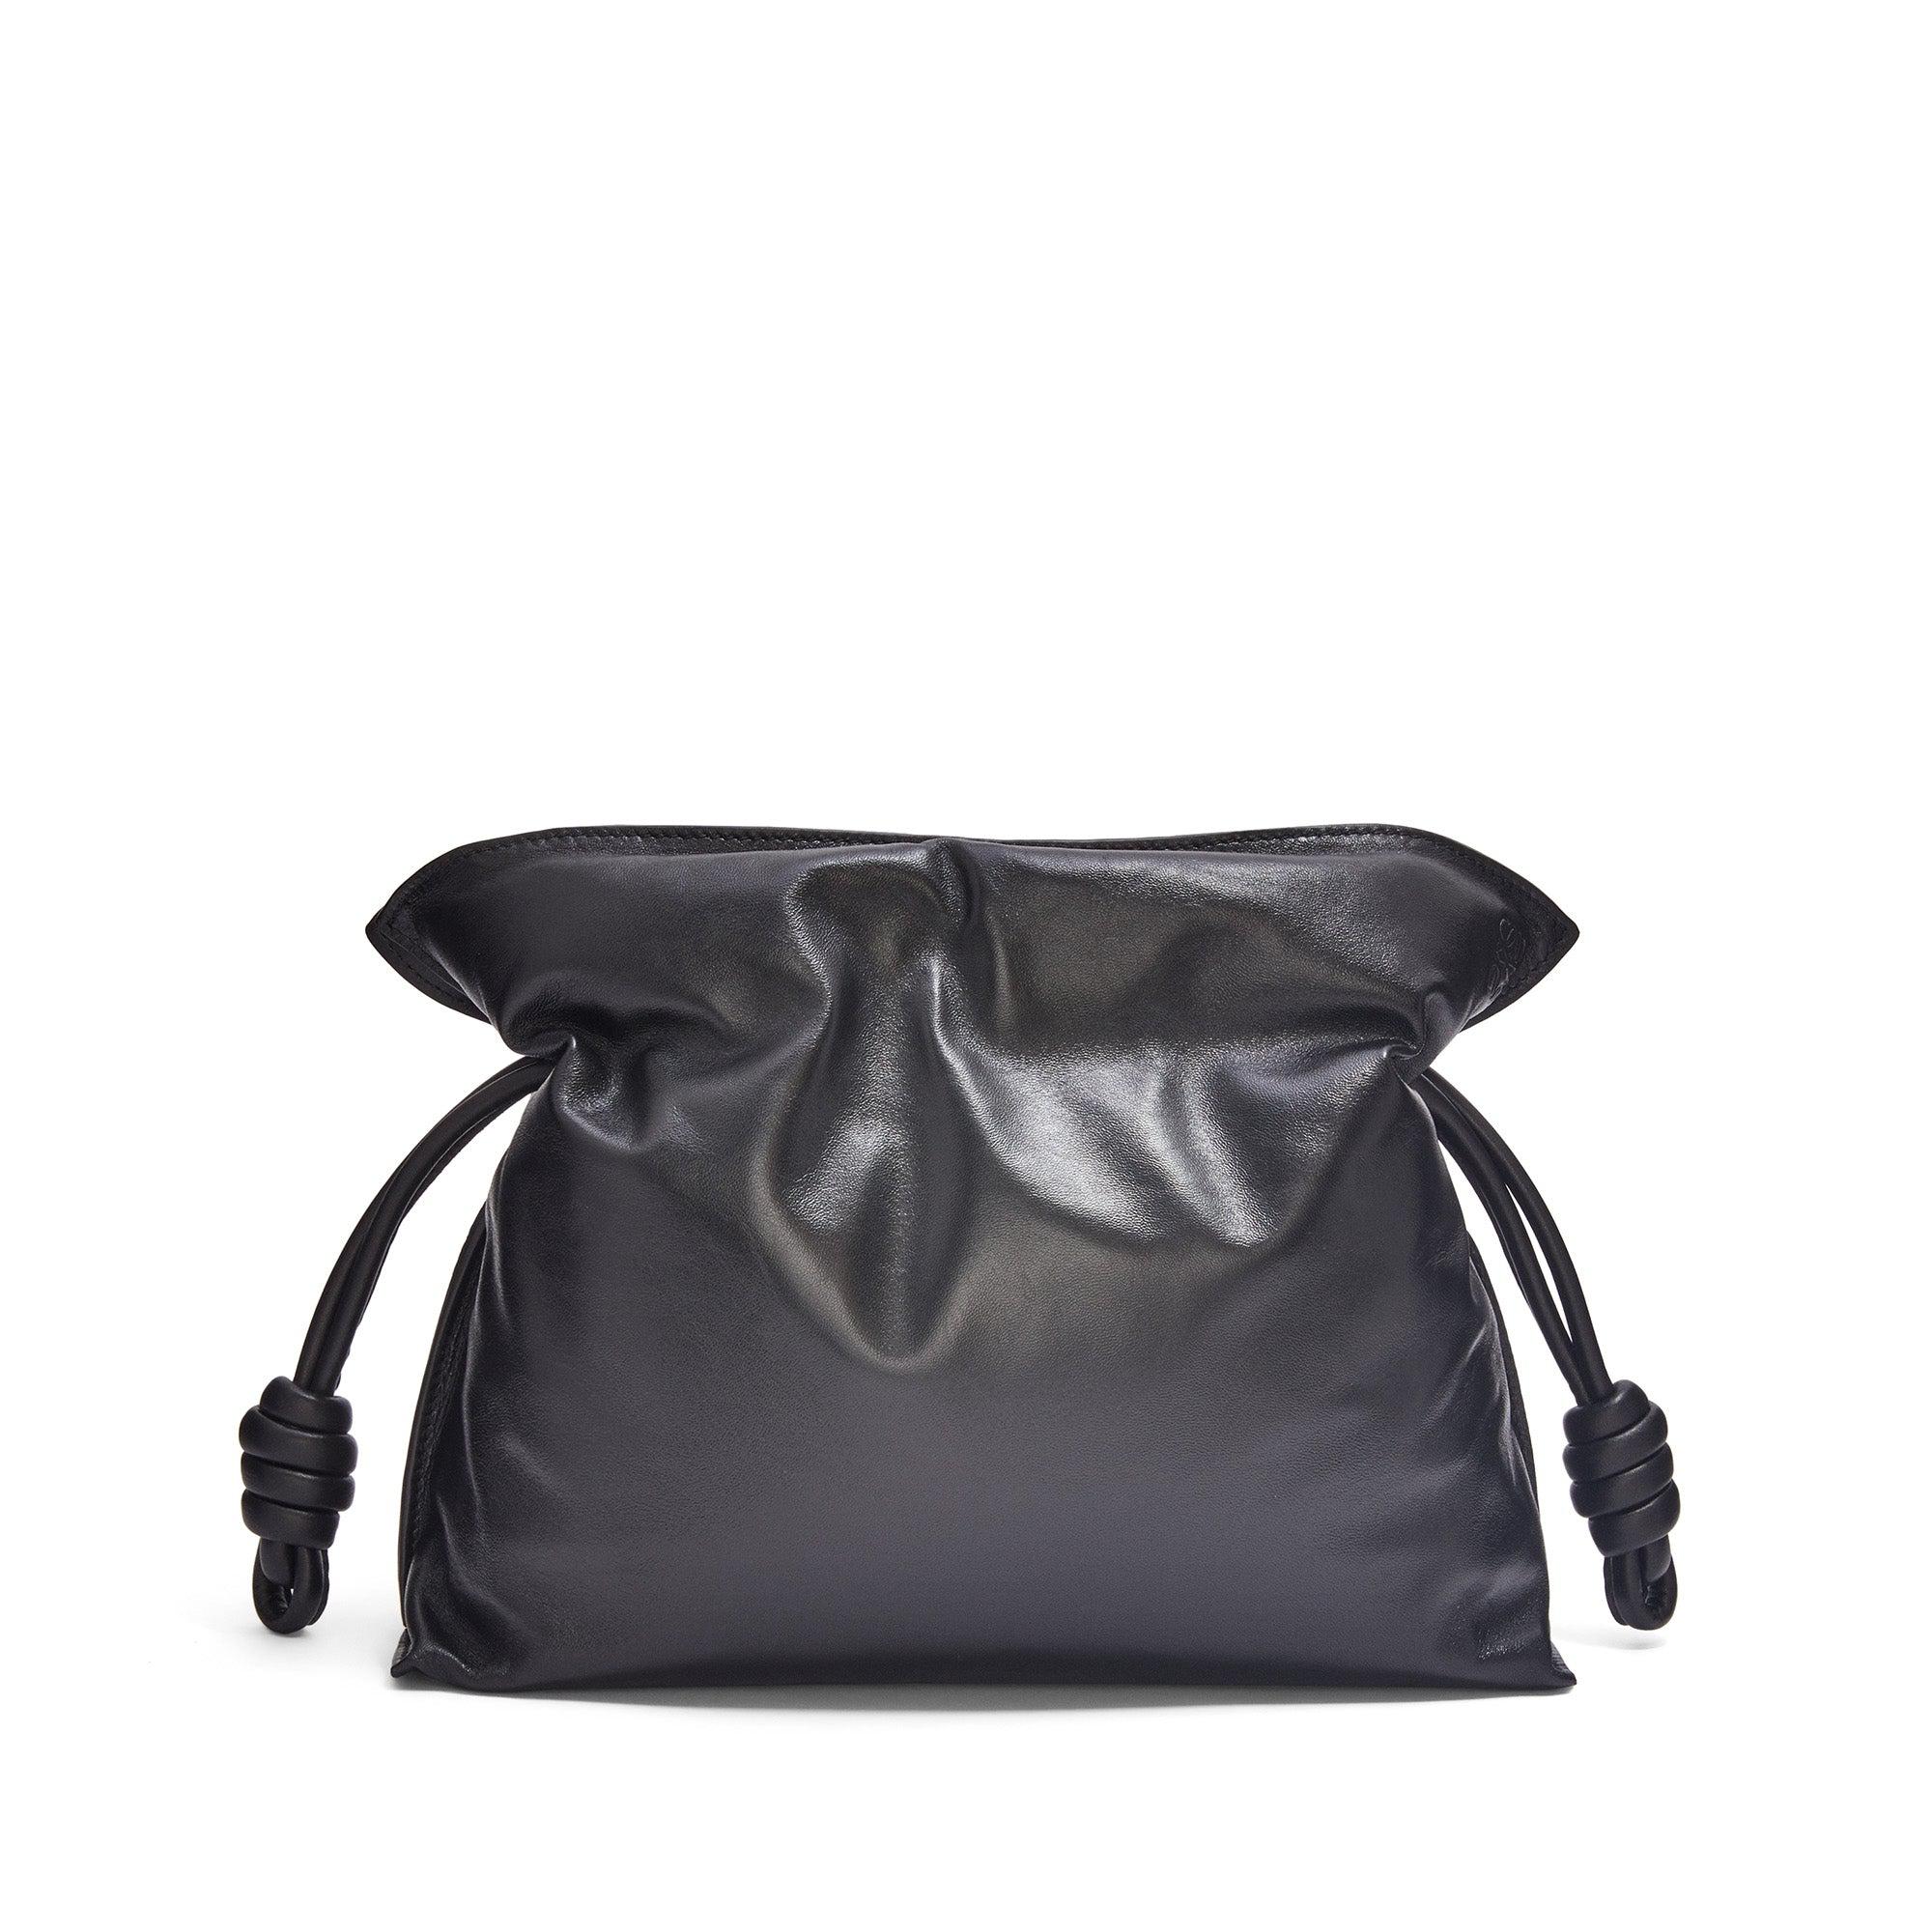 Loewe Women's Flamenco Clutch Puffer Bag (Black) by LOEWE